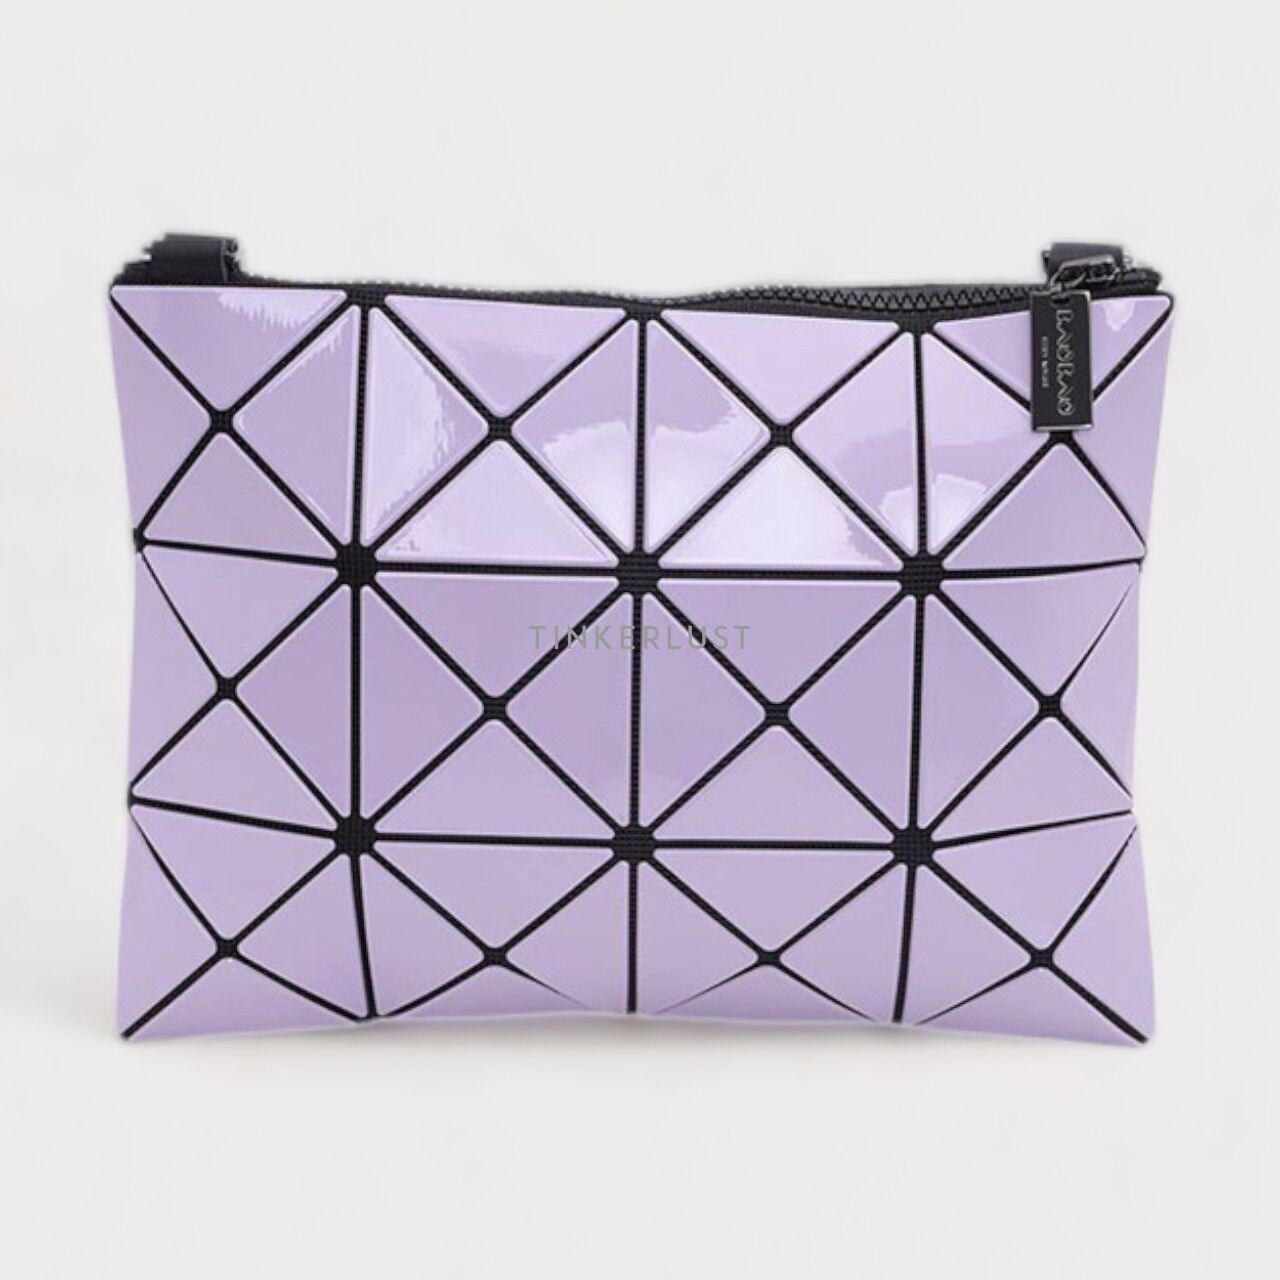 Bao Bao Issey Miyake Lucent Zipped Crossbody Bag in Light Lavender/Dark Lavender